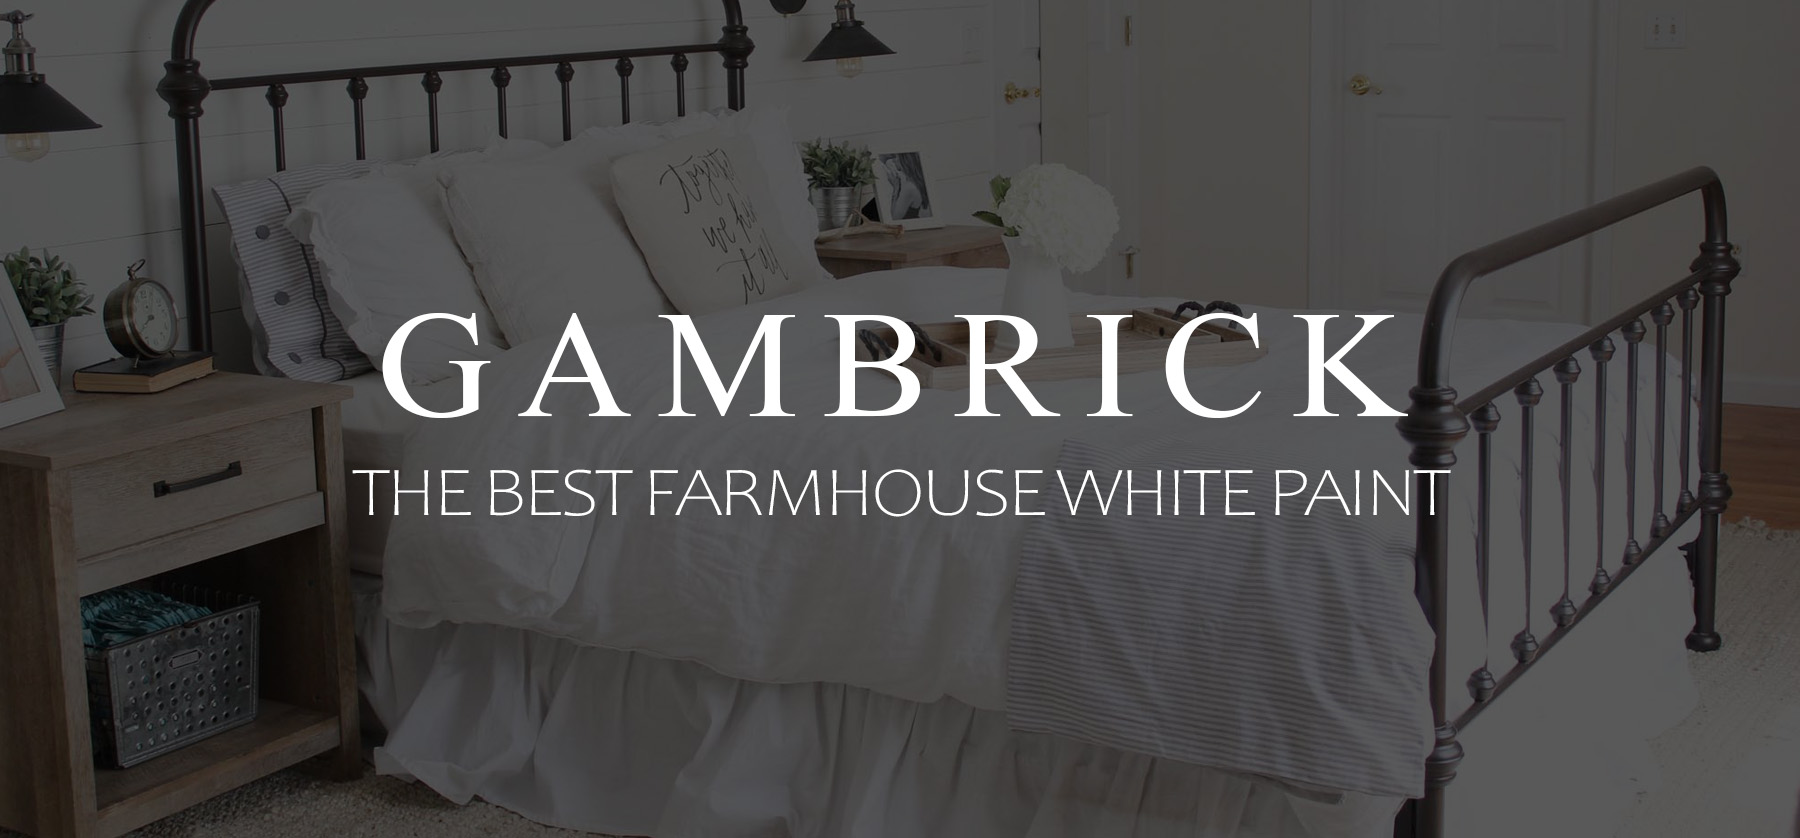 The best farmhouse white paint Banner 1